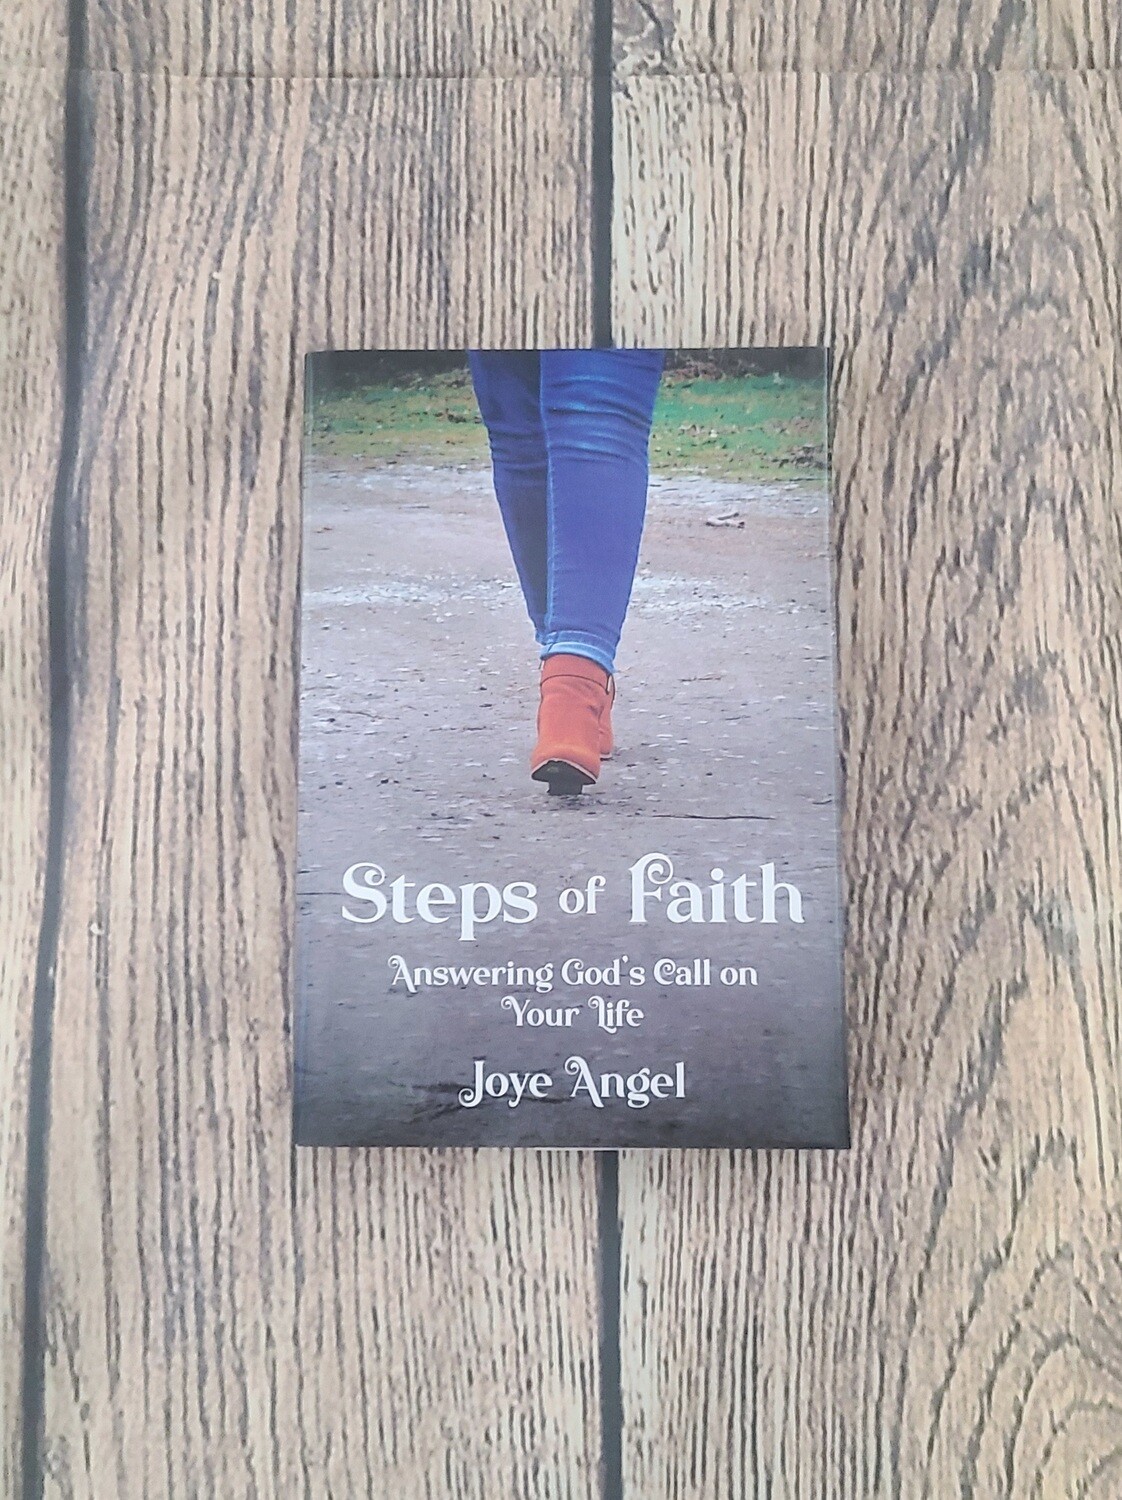 Steps of Faith: Answering God's Call on Your Life by Joye Angel - Hardback (Autographed)